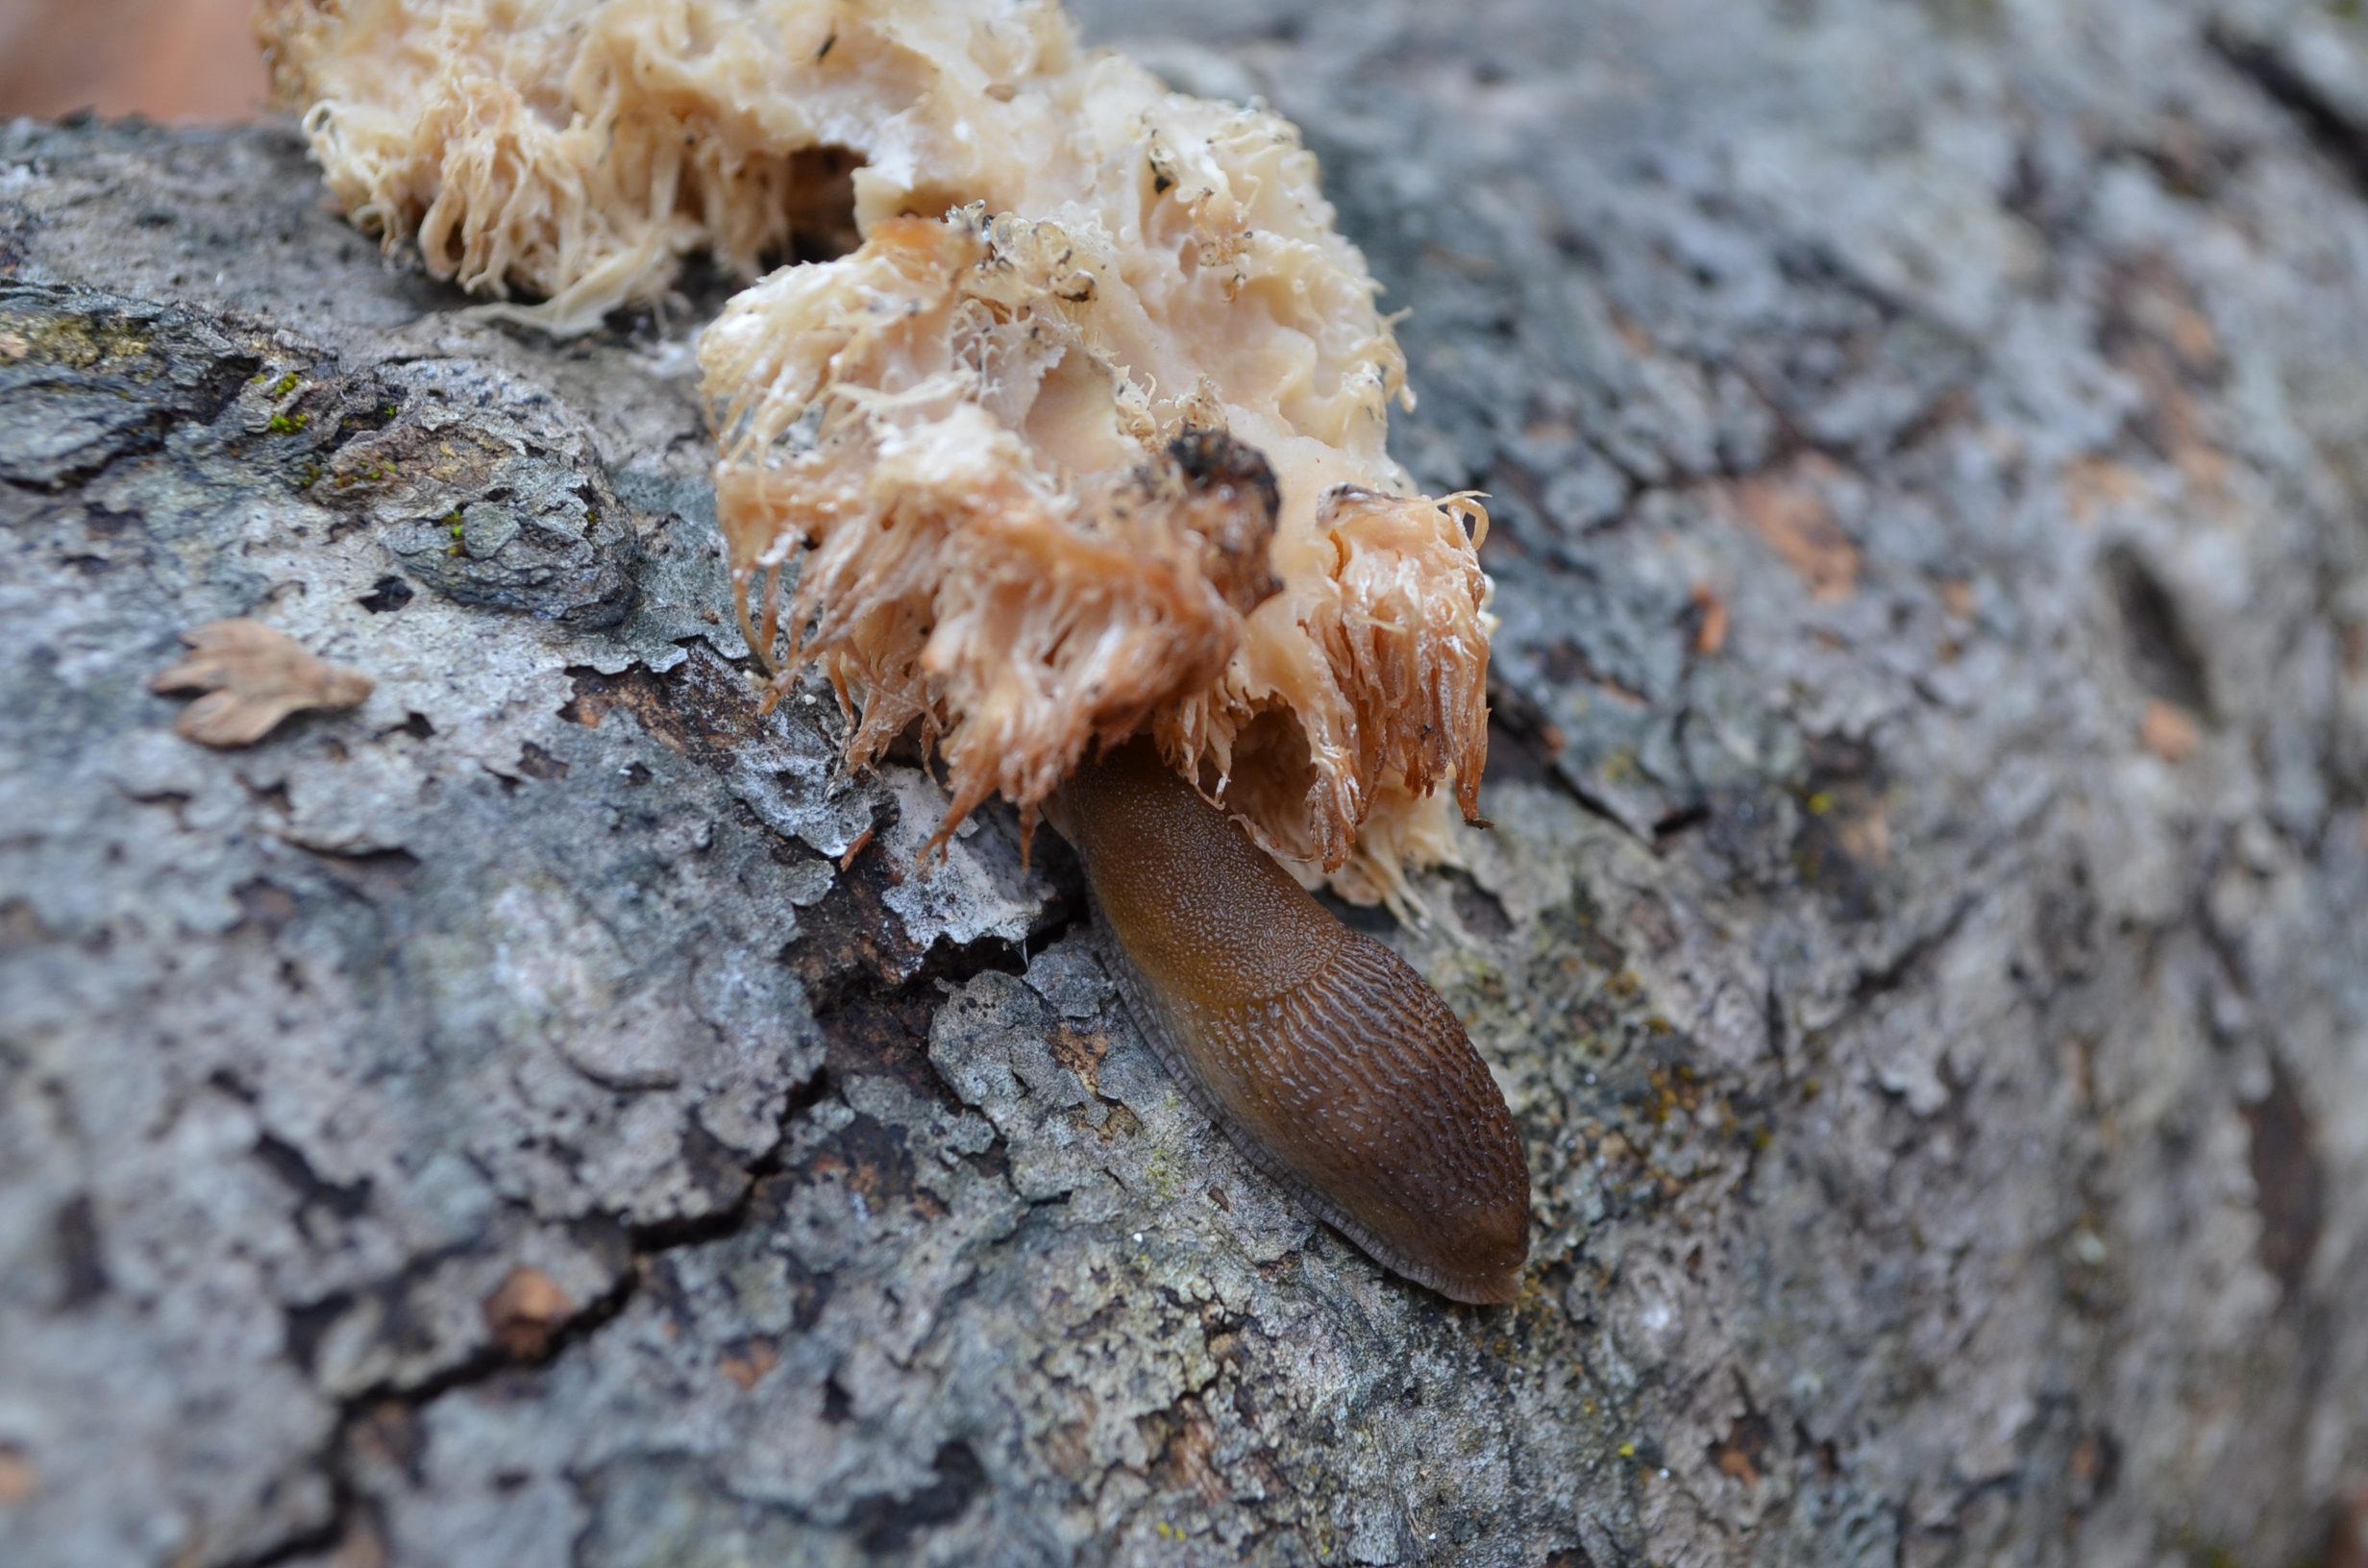 Slug under fungi